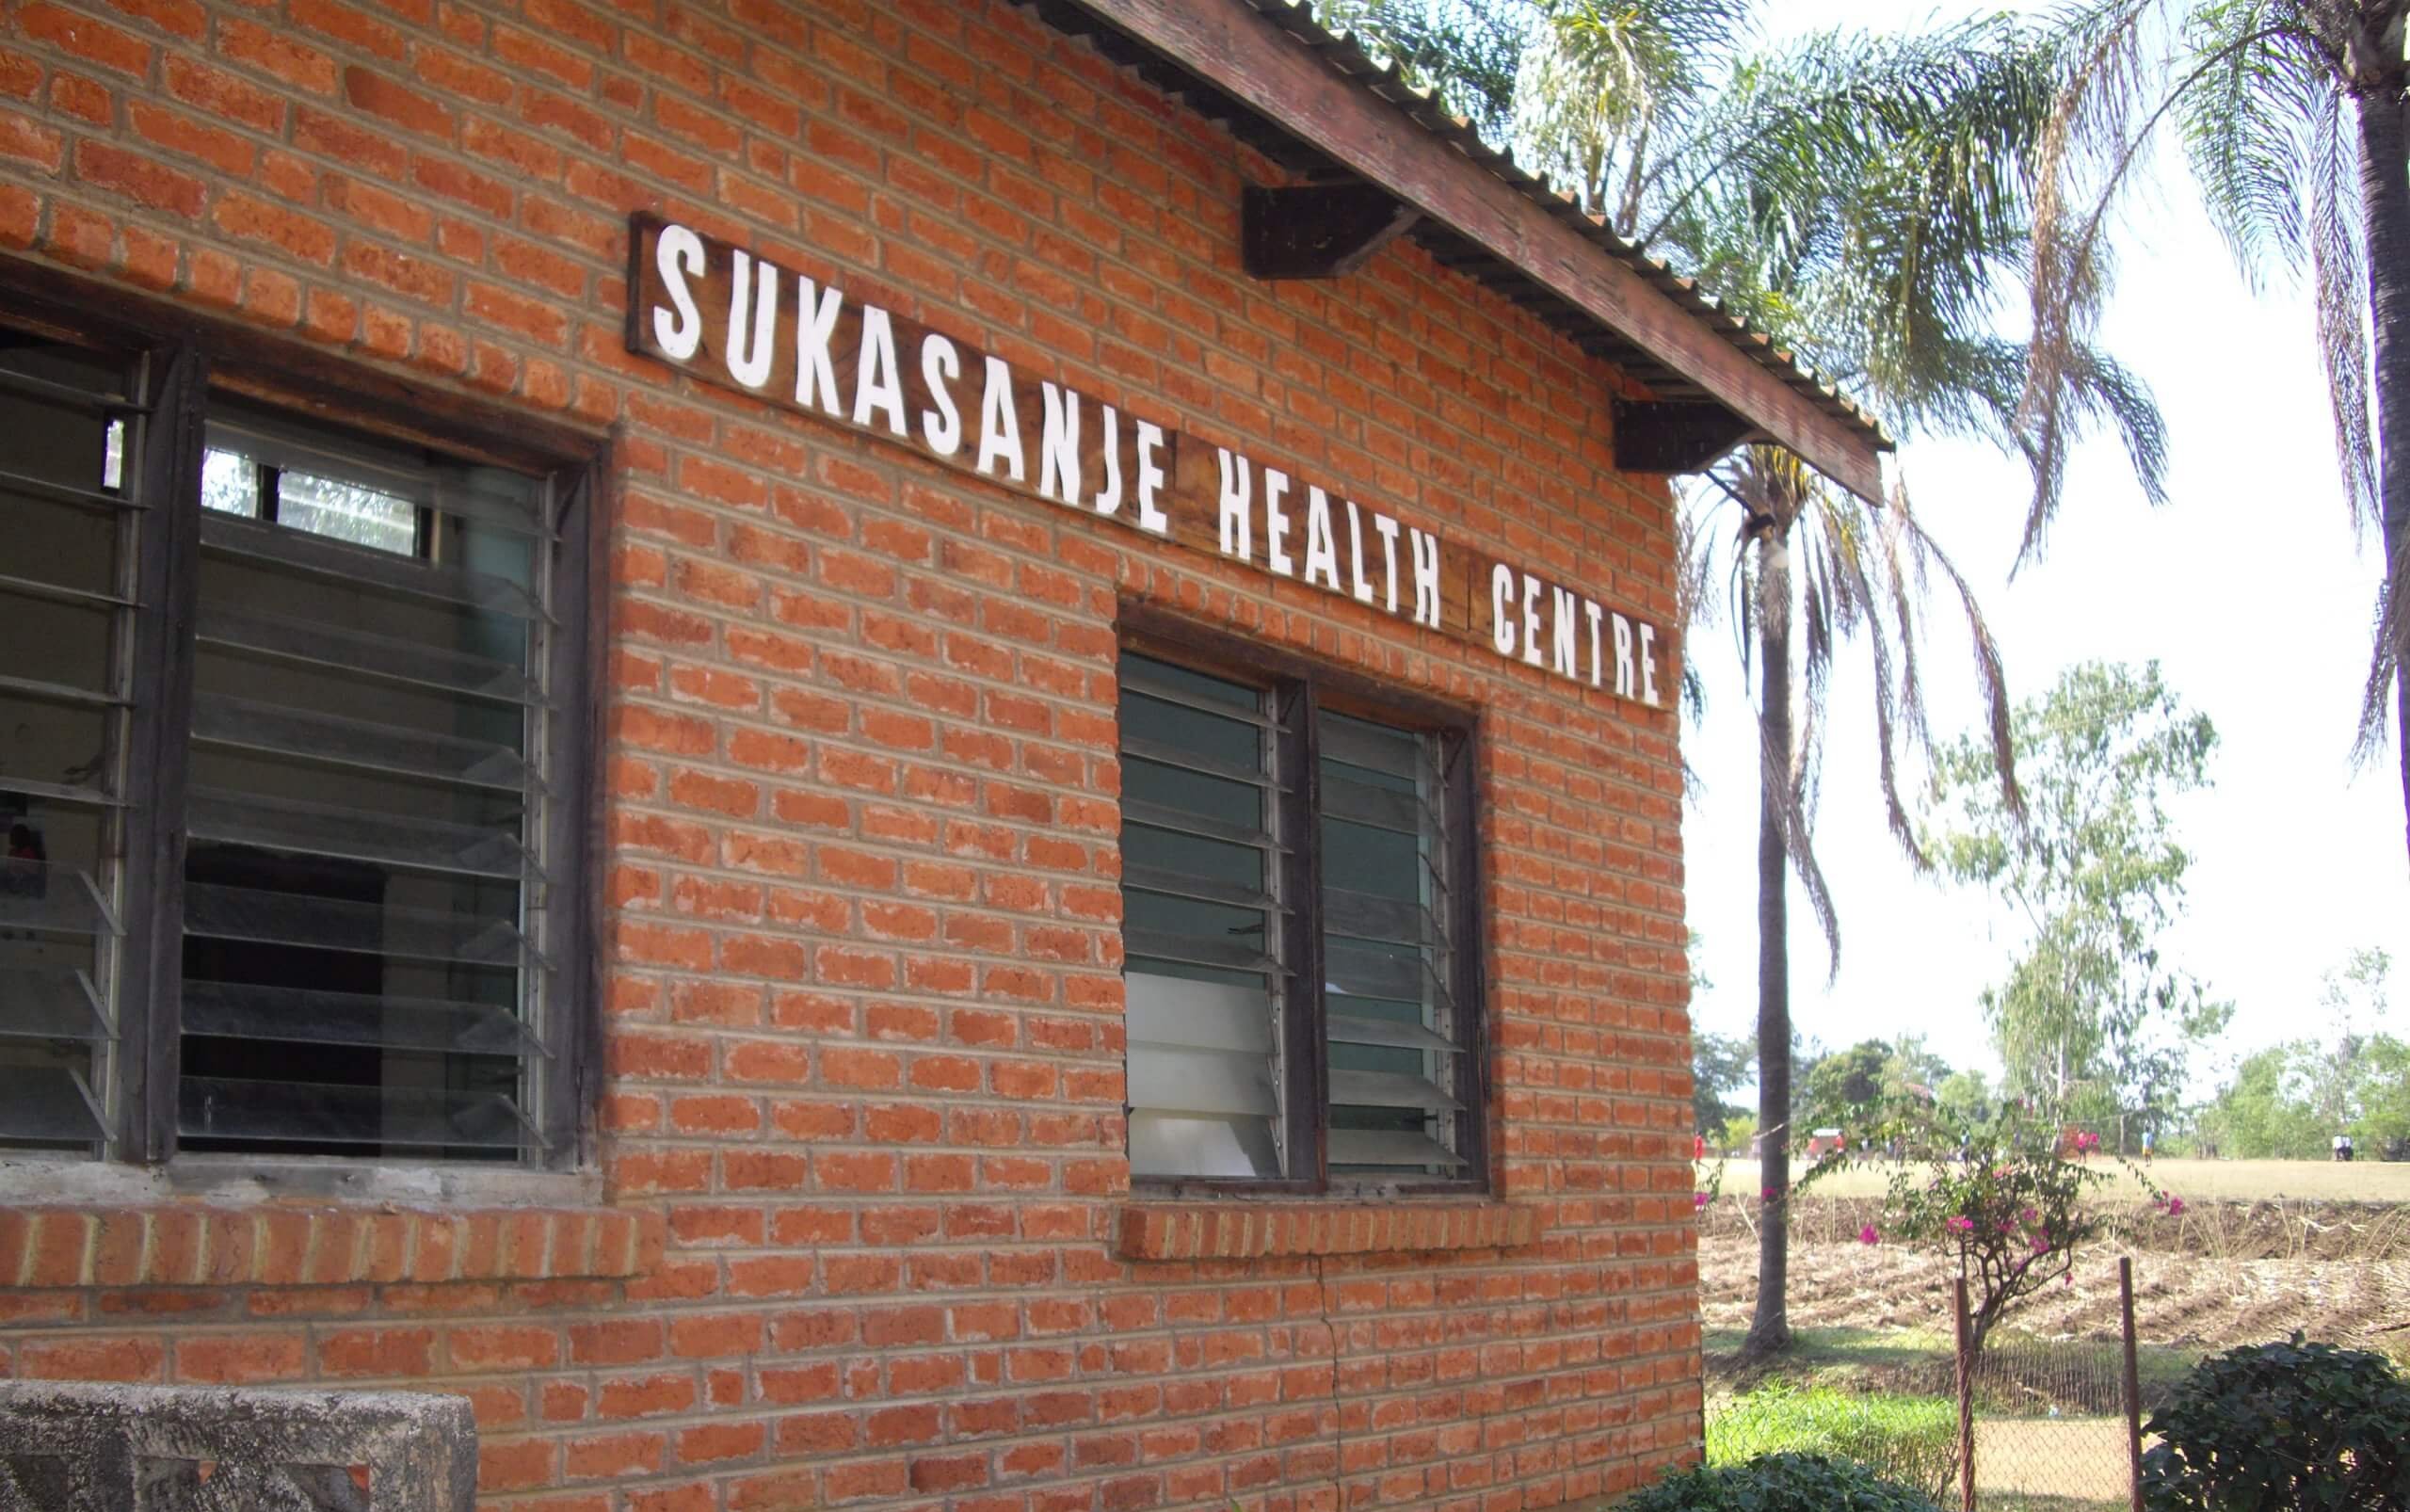 Sukasanje Health Centre